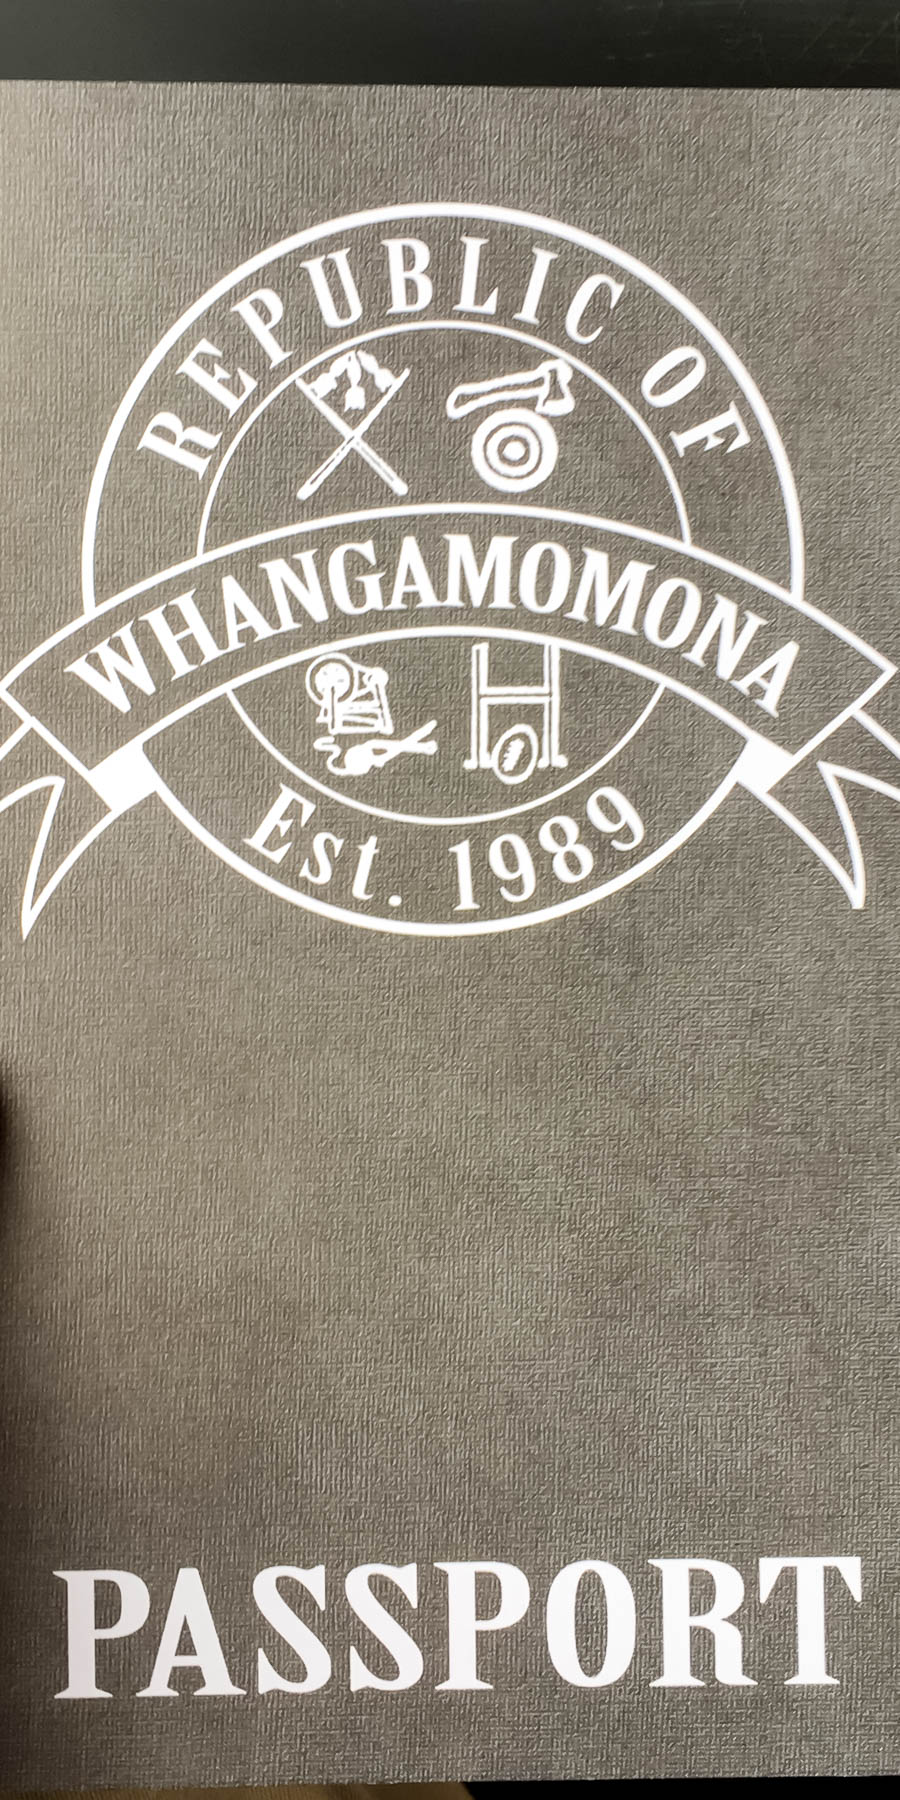 1. Whangamamona & The Forgotten Highway